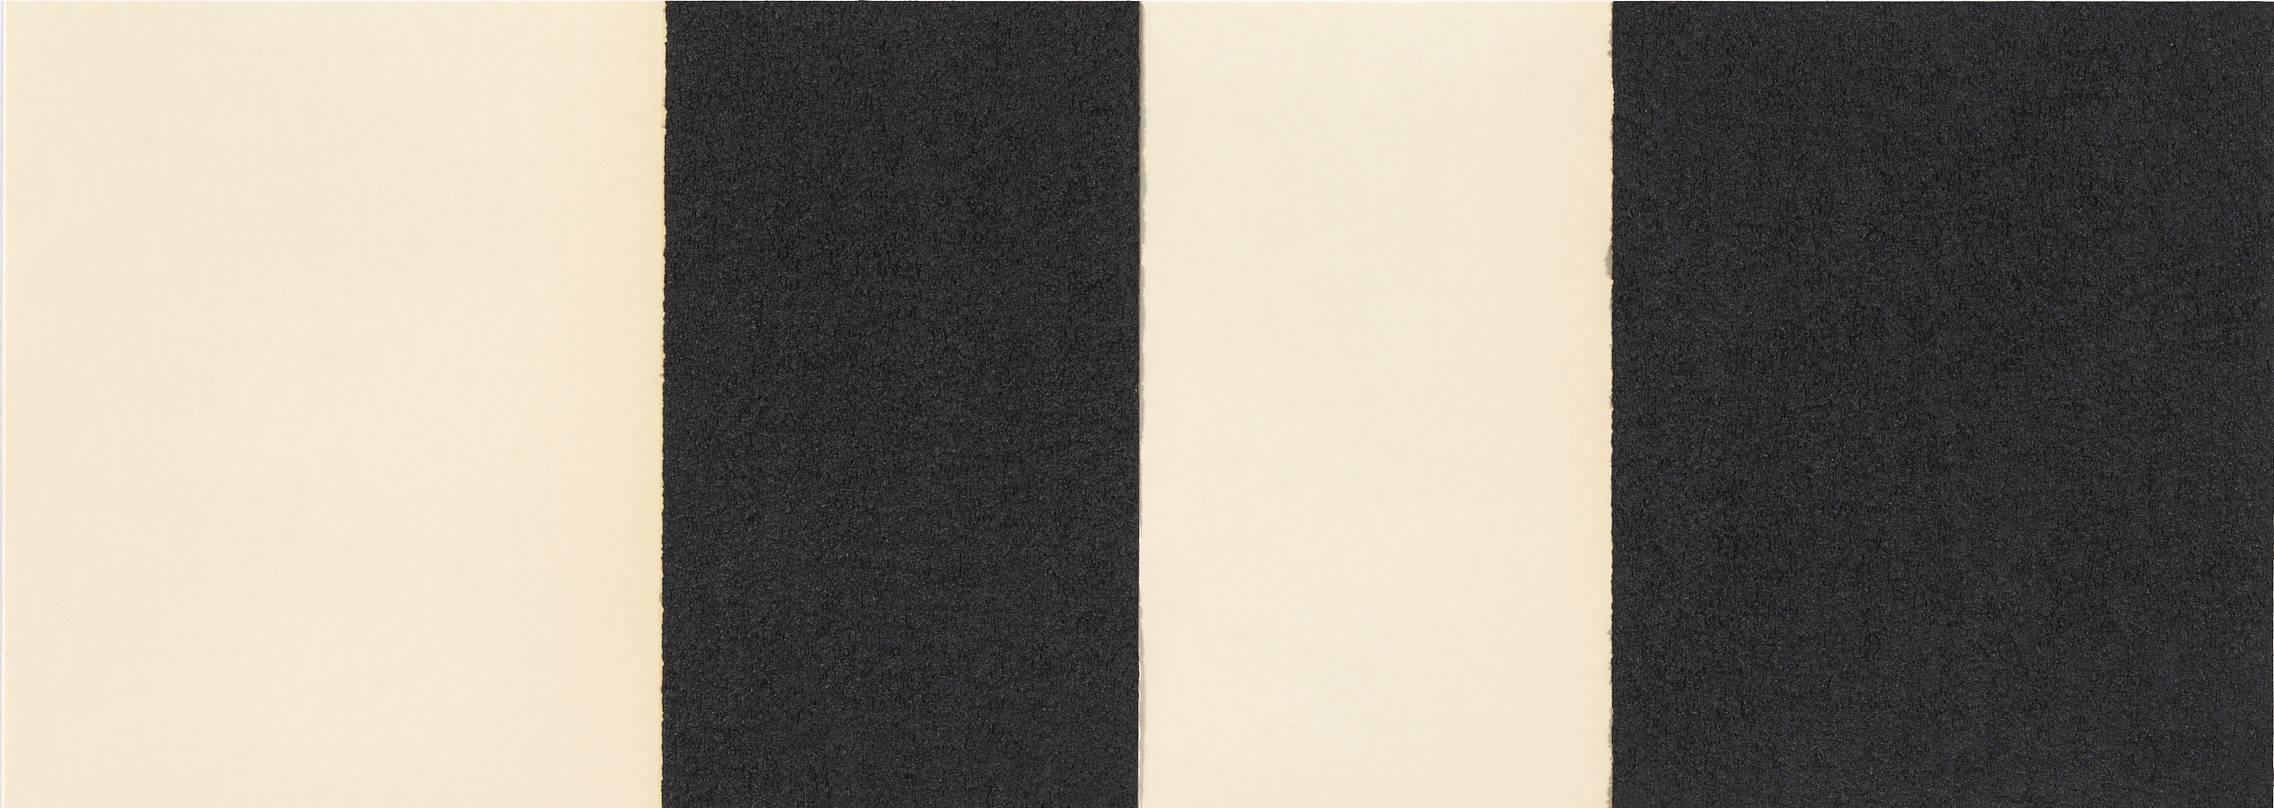 Richard Serra Print - Horizontal Reversal II